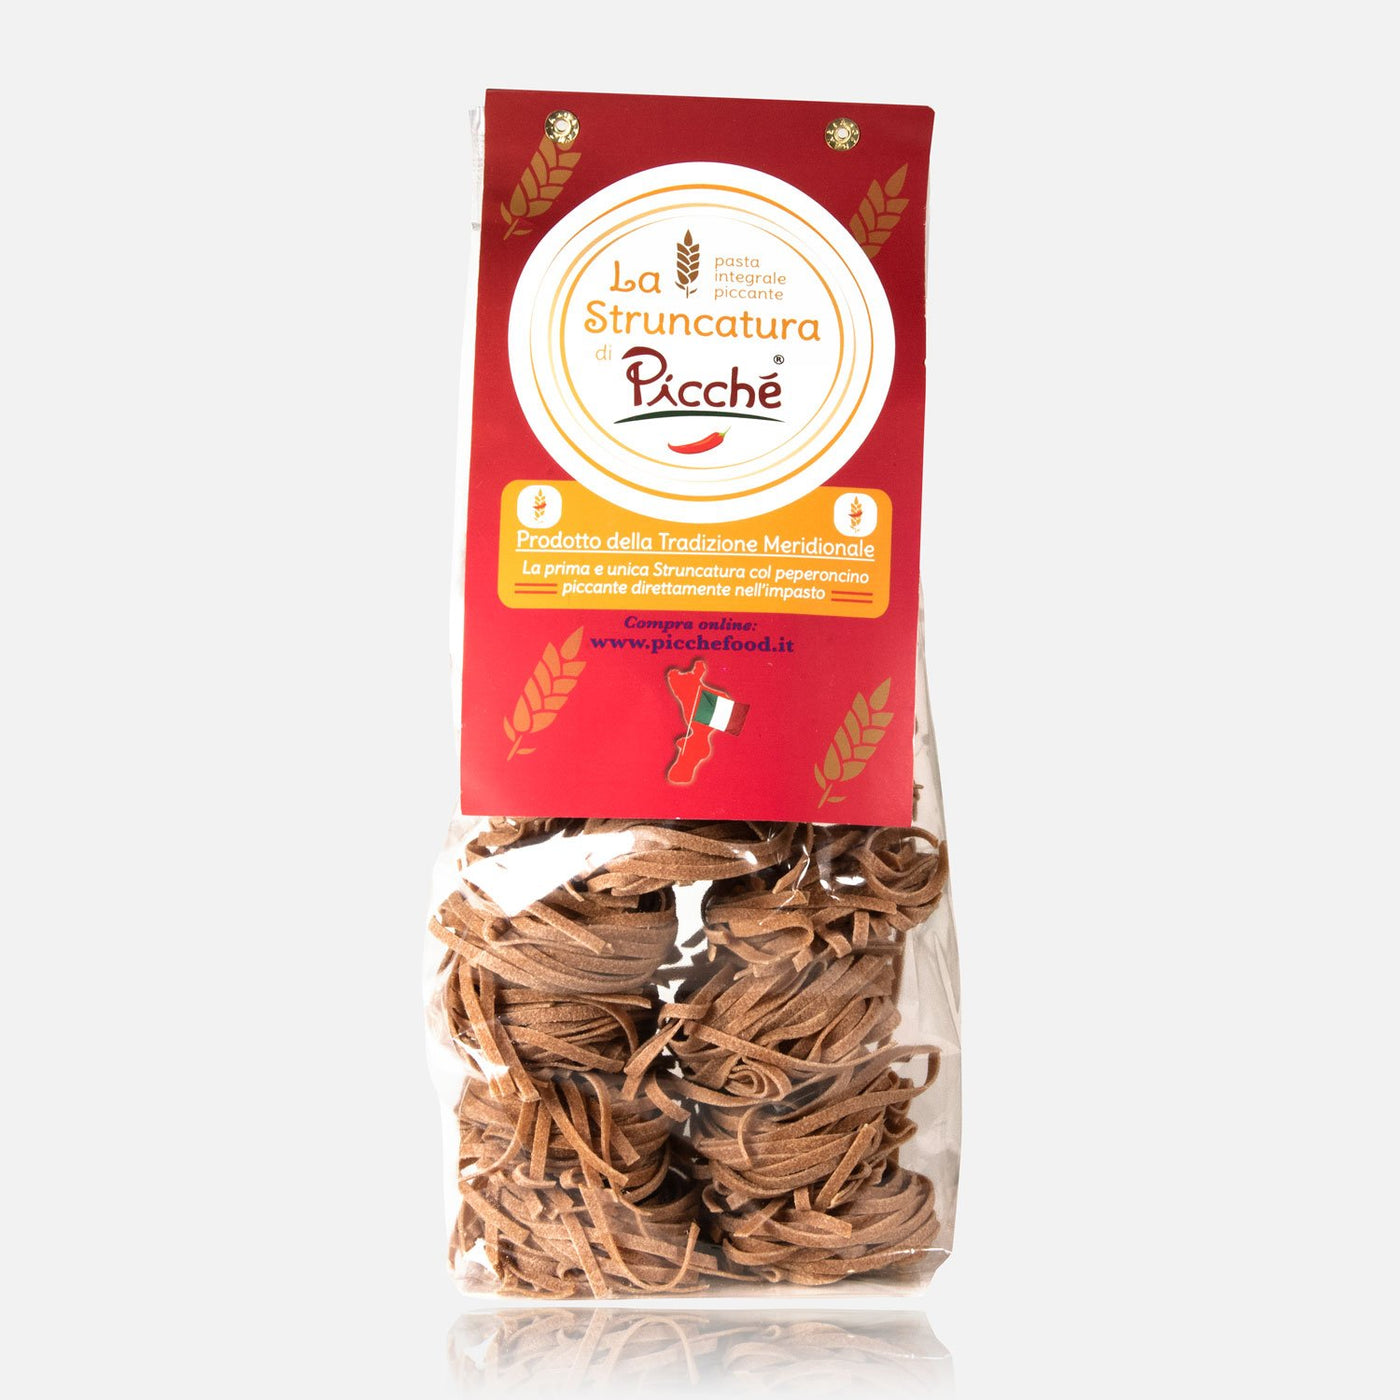 La Struncatura - Handmade Calabrian pasta